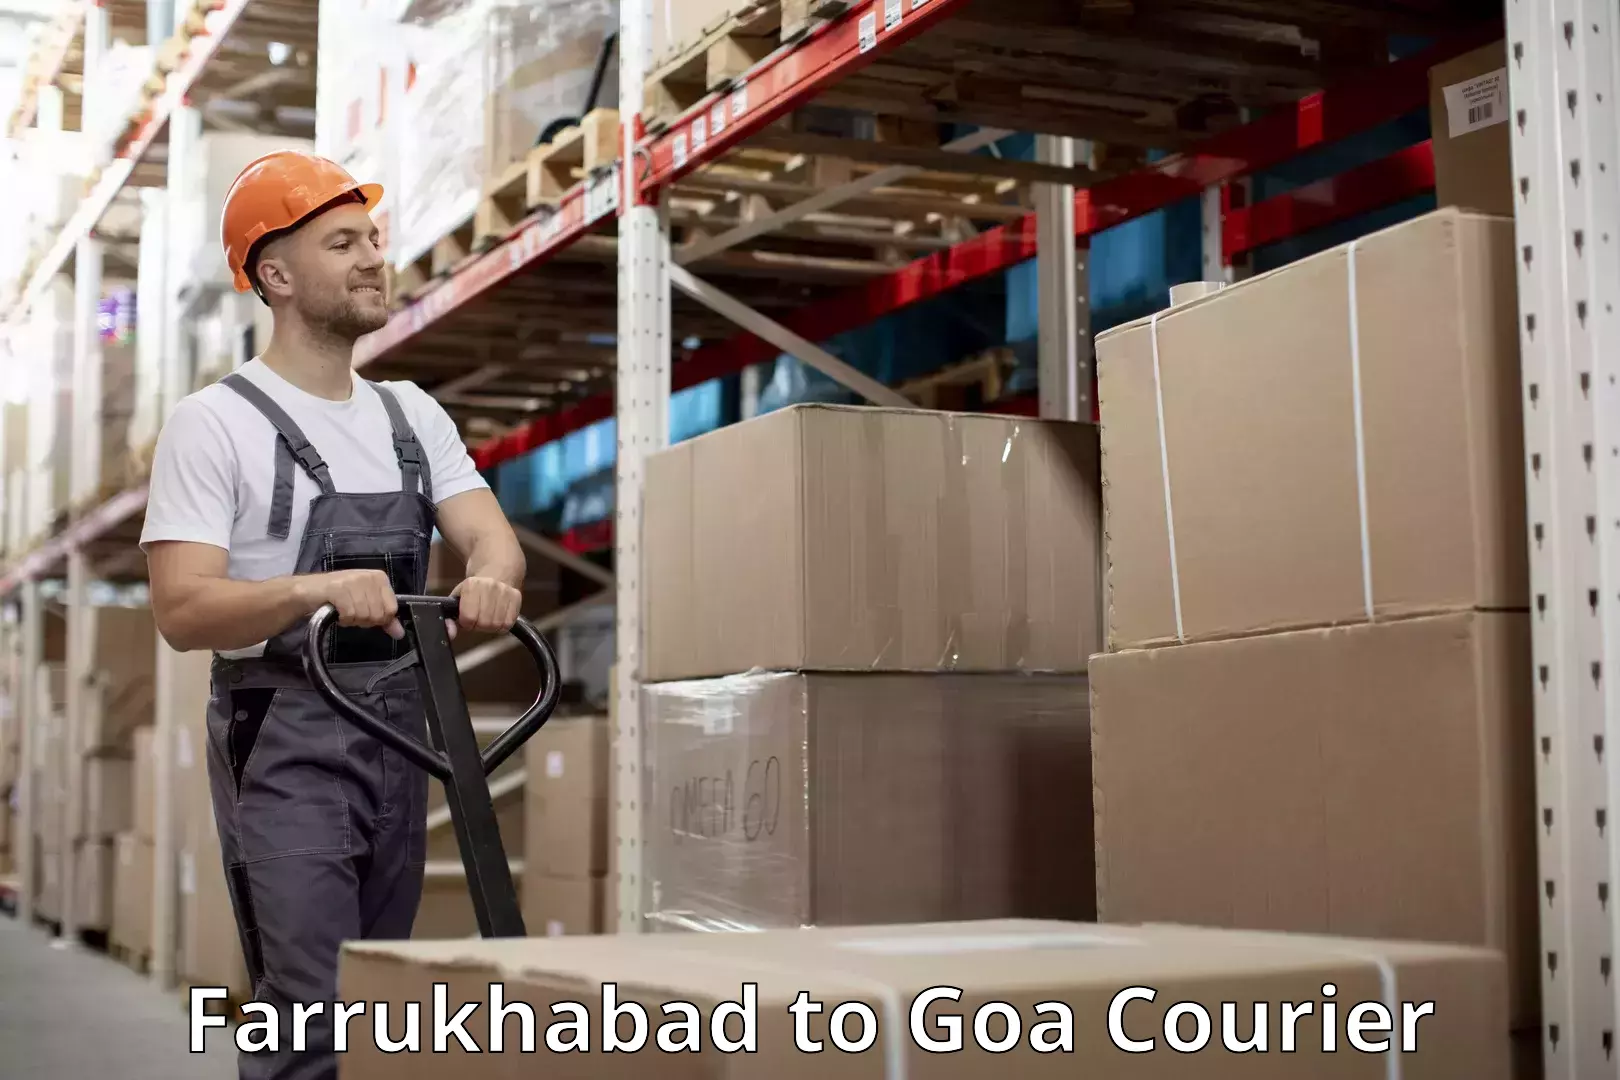 Luggage transport consultancy Farrukhabad to Goa